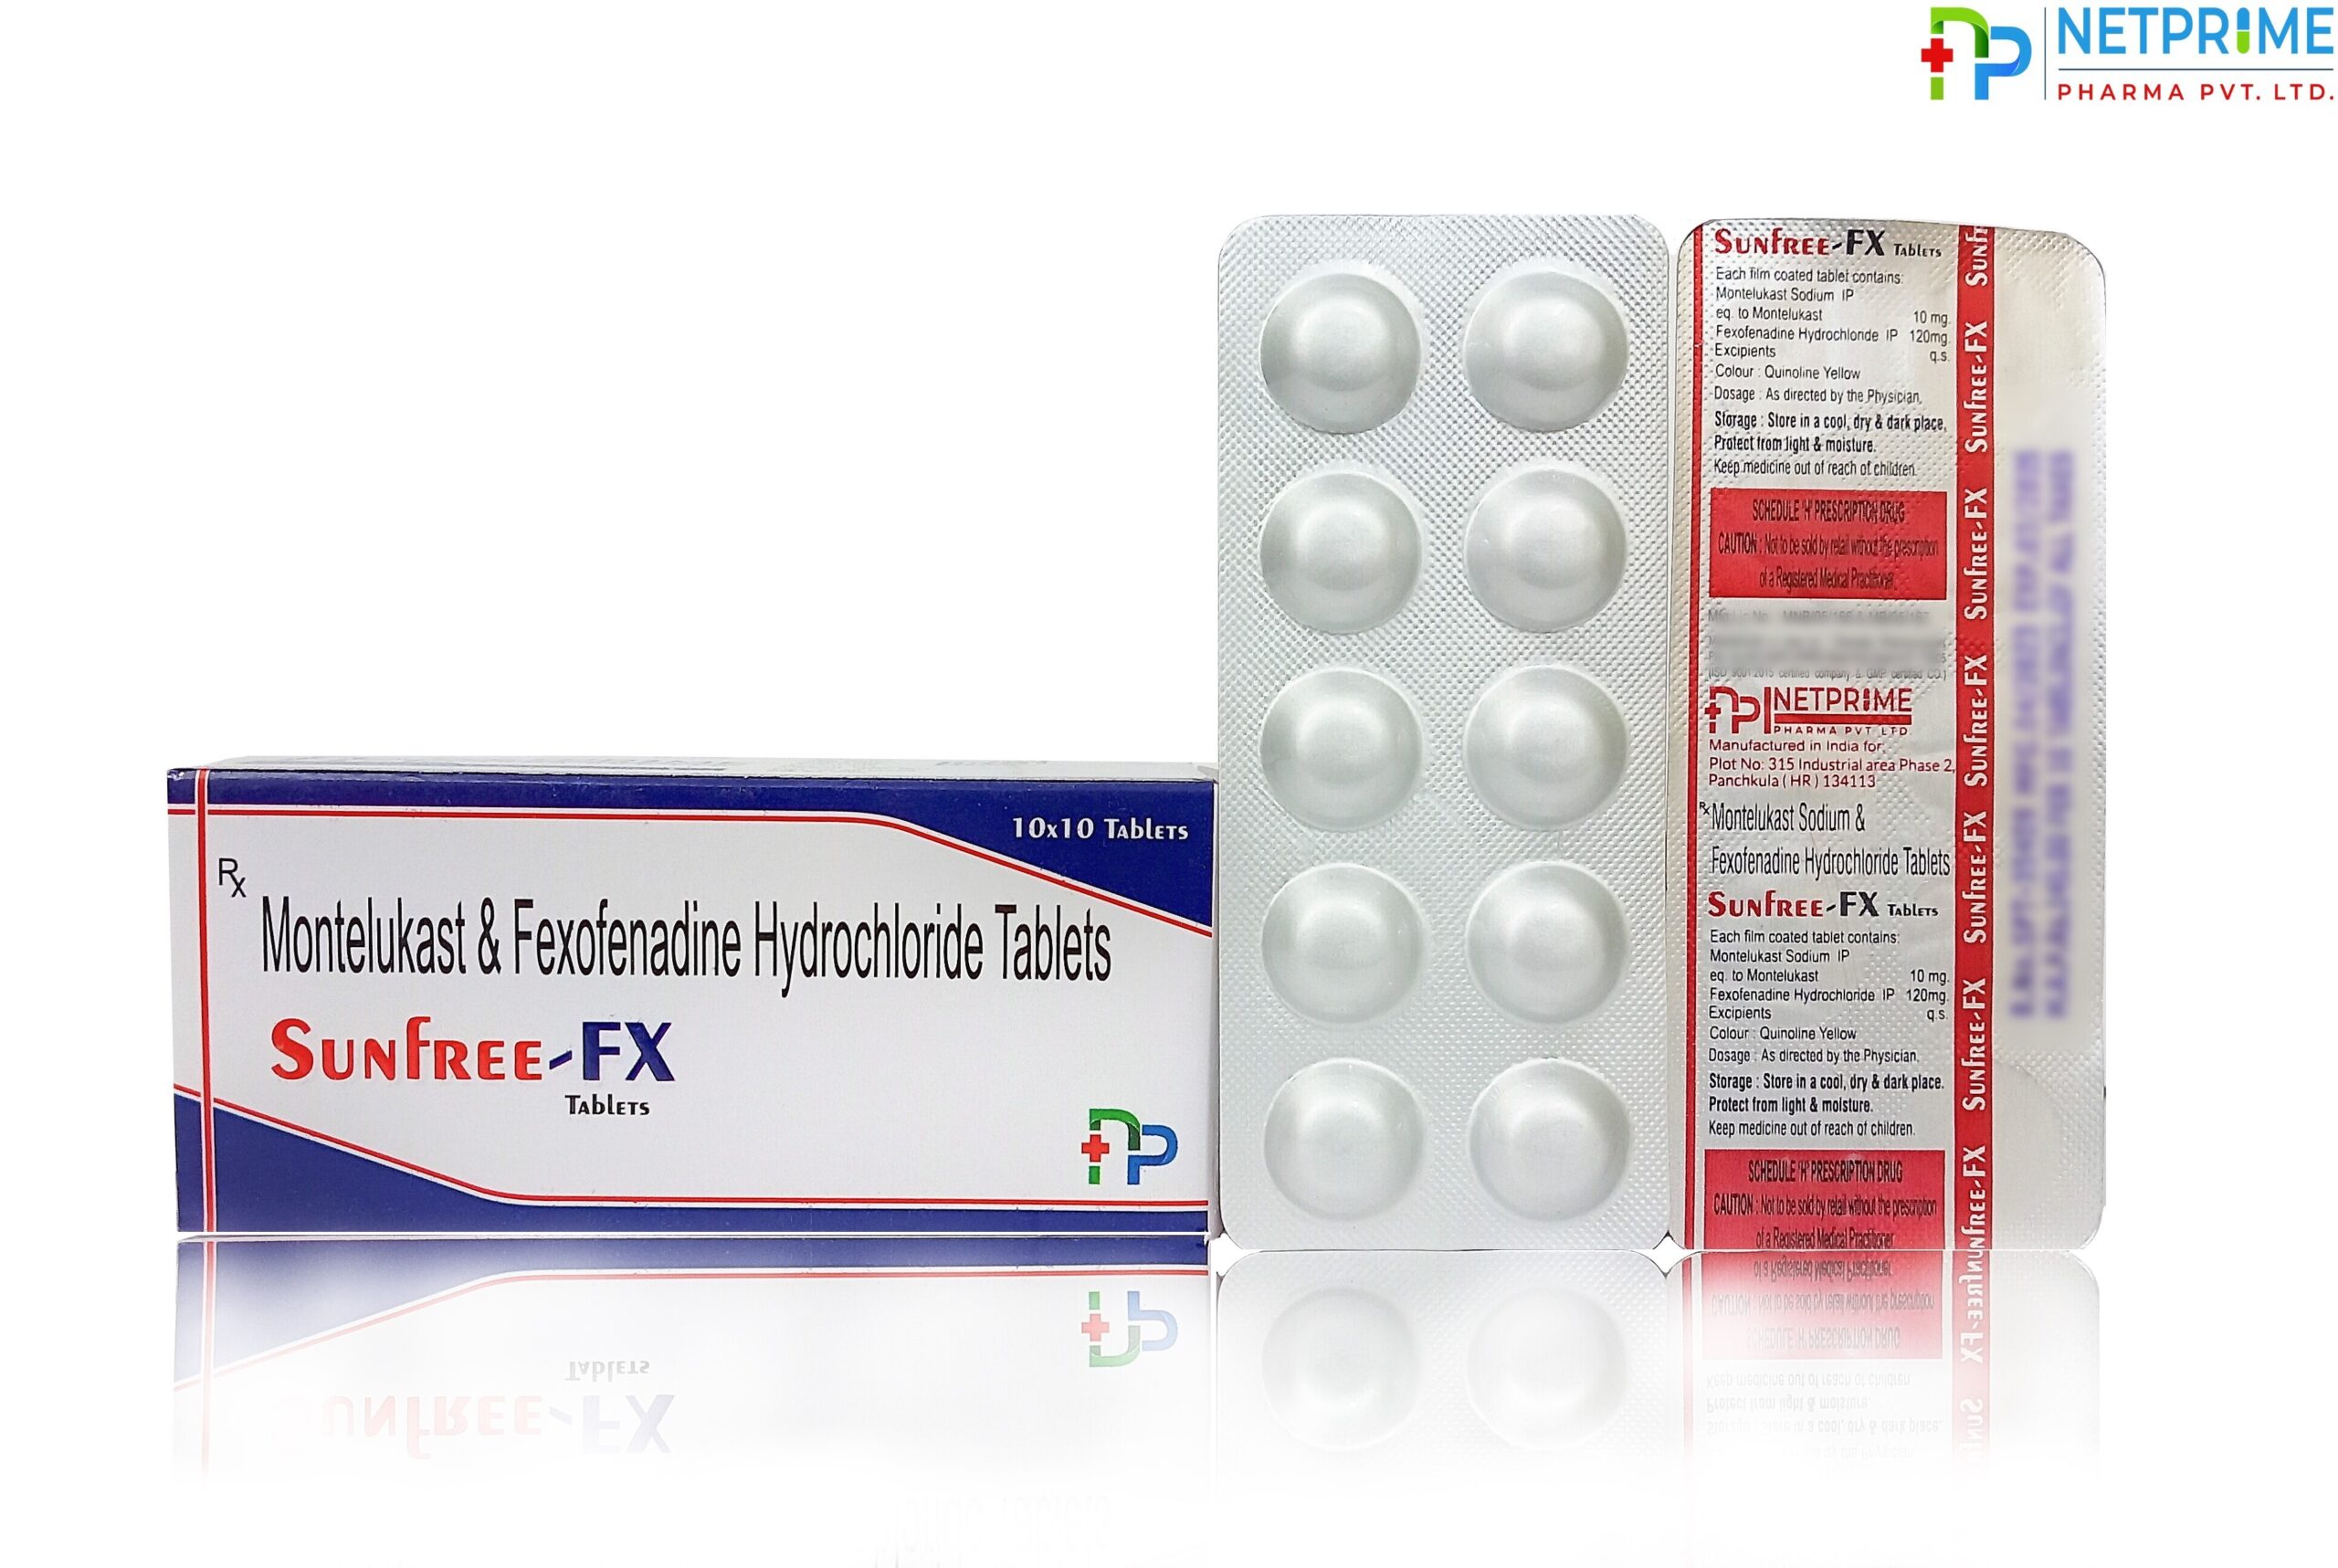 Fexofenadine HCL 120 mg and Montelukast Sodium 10 mg Tablets